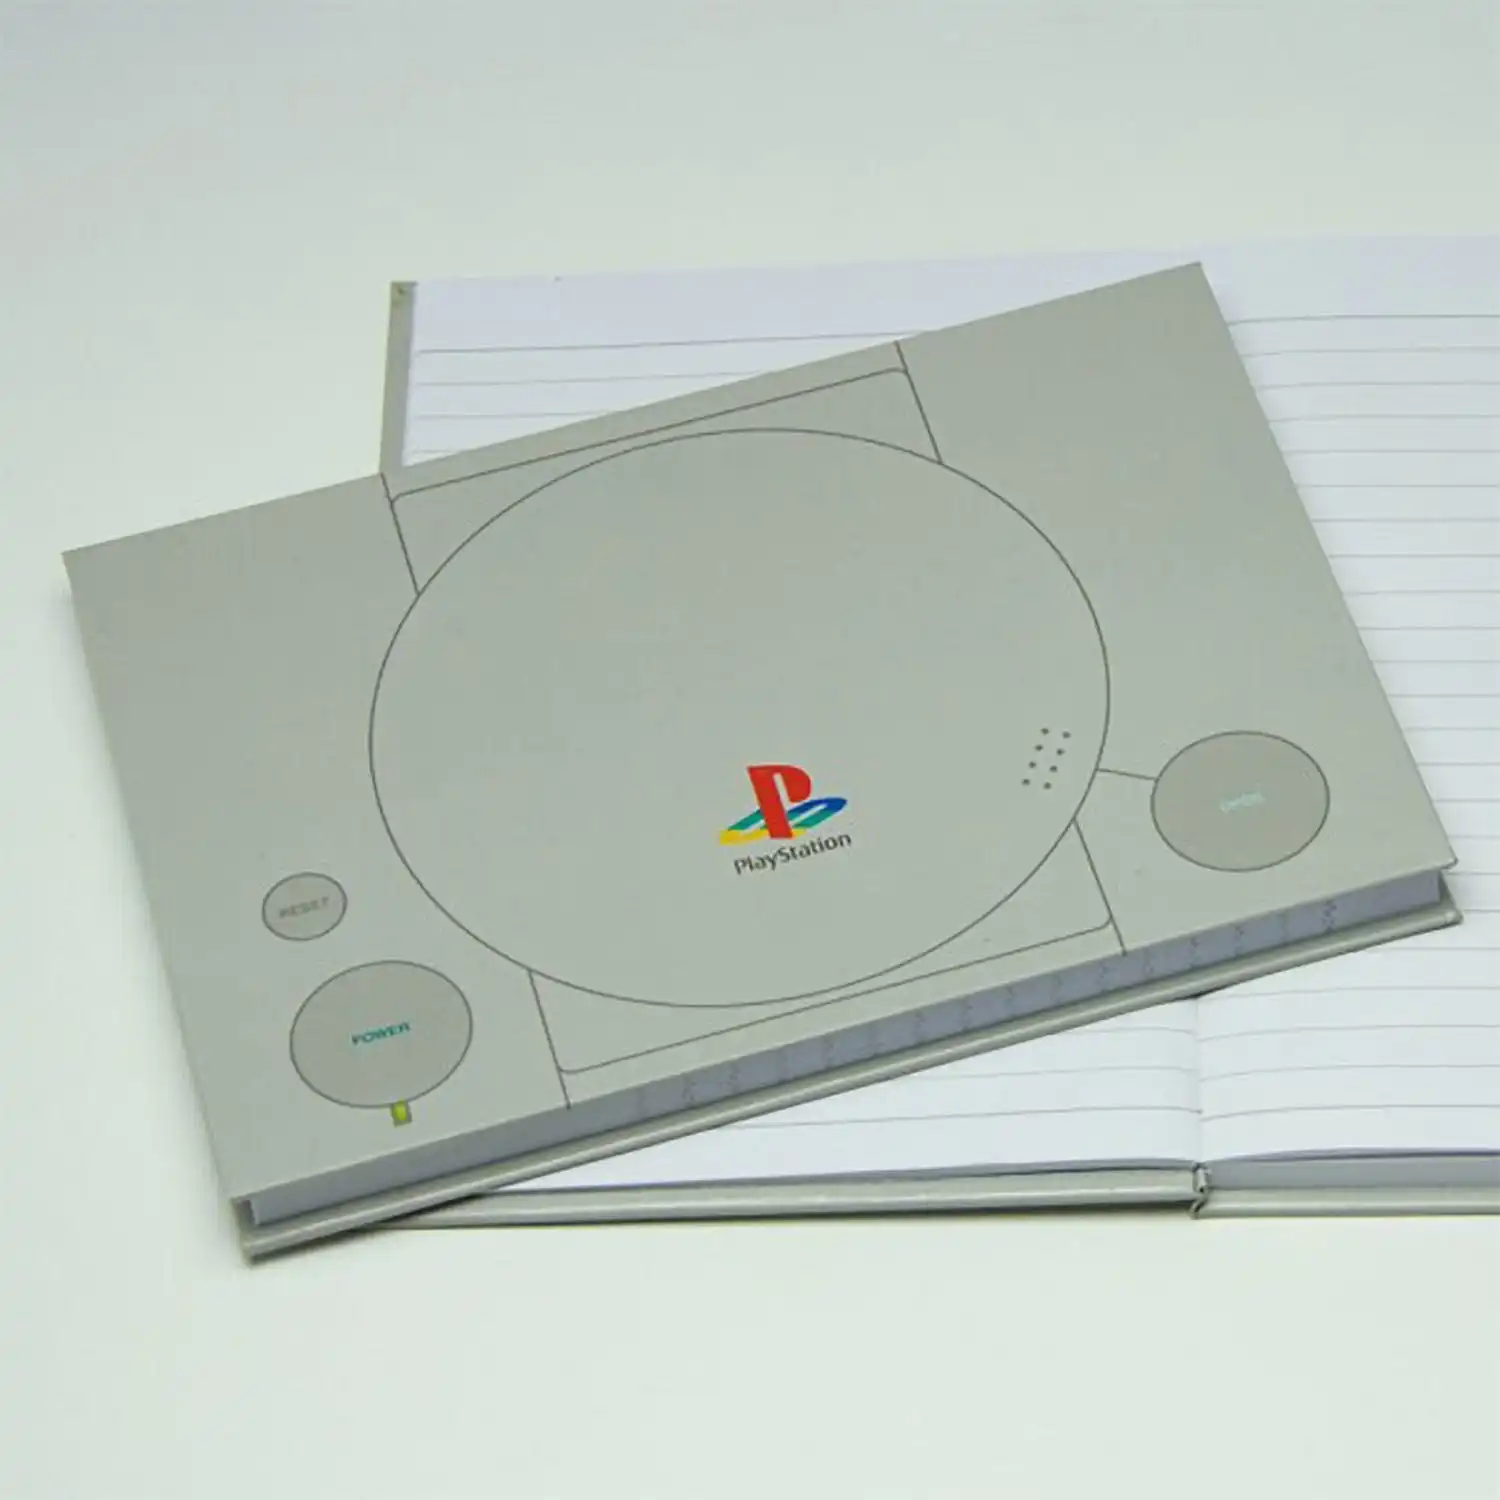 Playstation - Notebook